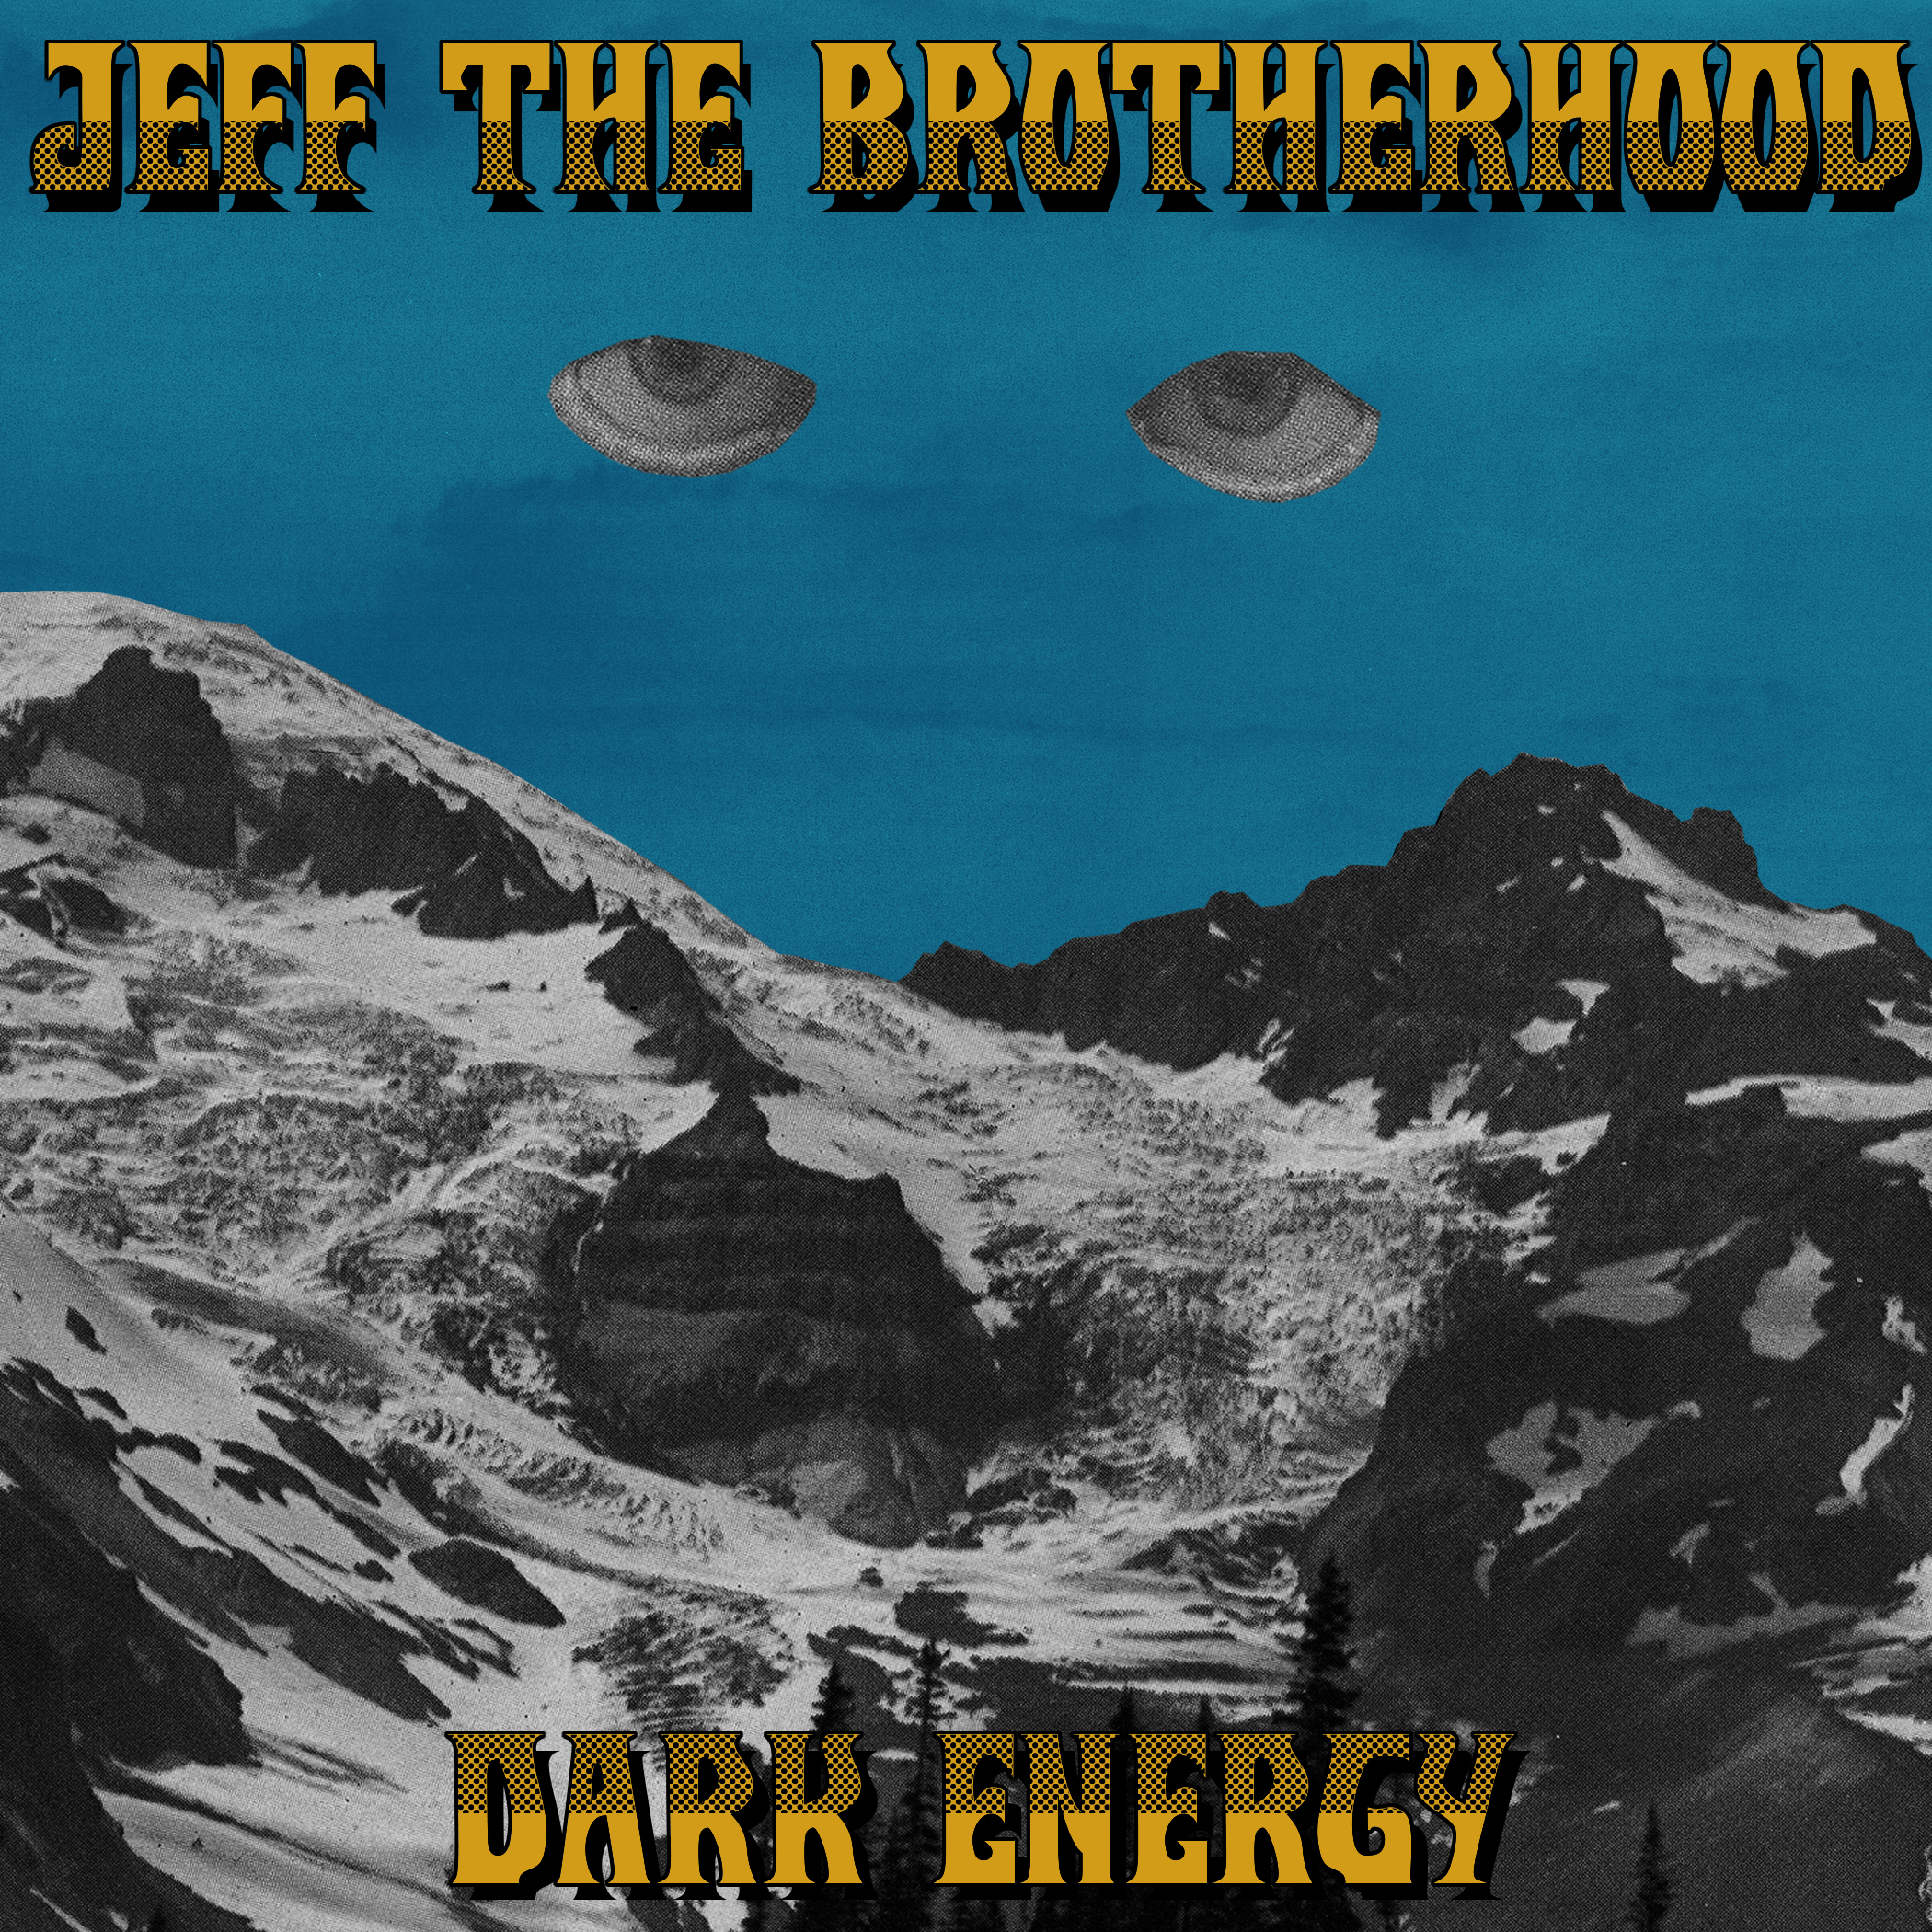 Jeff the Brotherhood - Dark Energy 7"